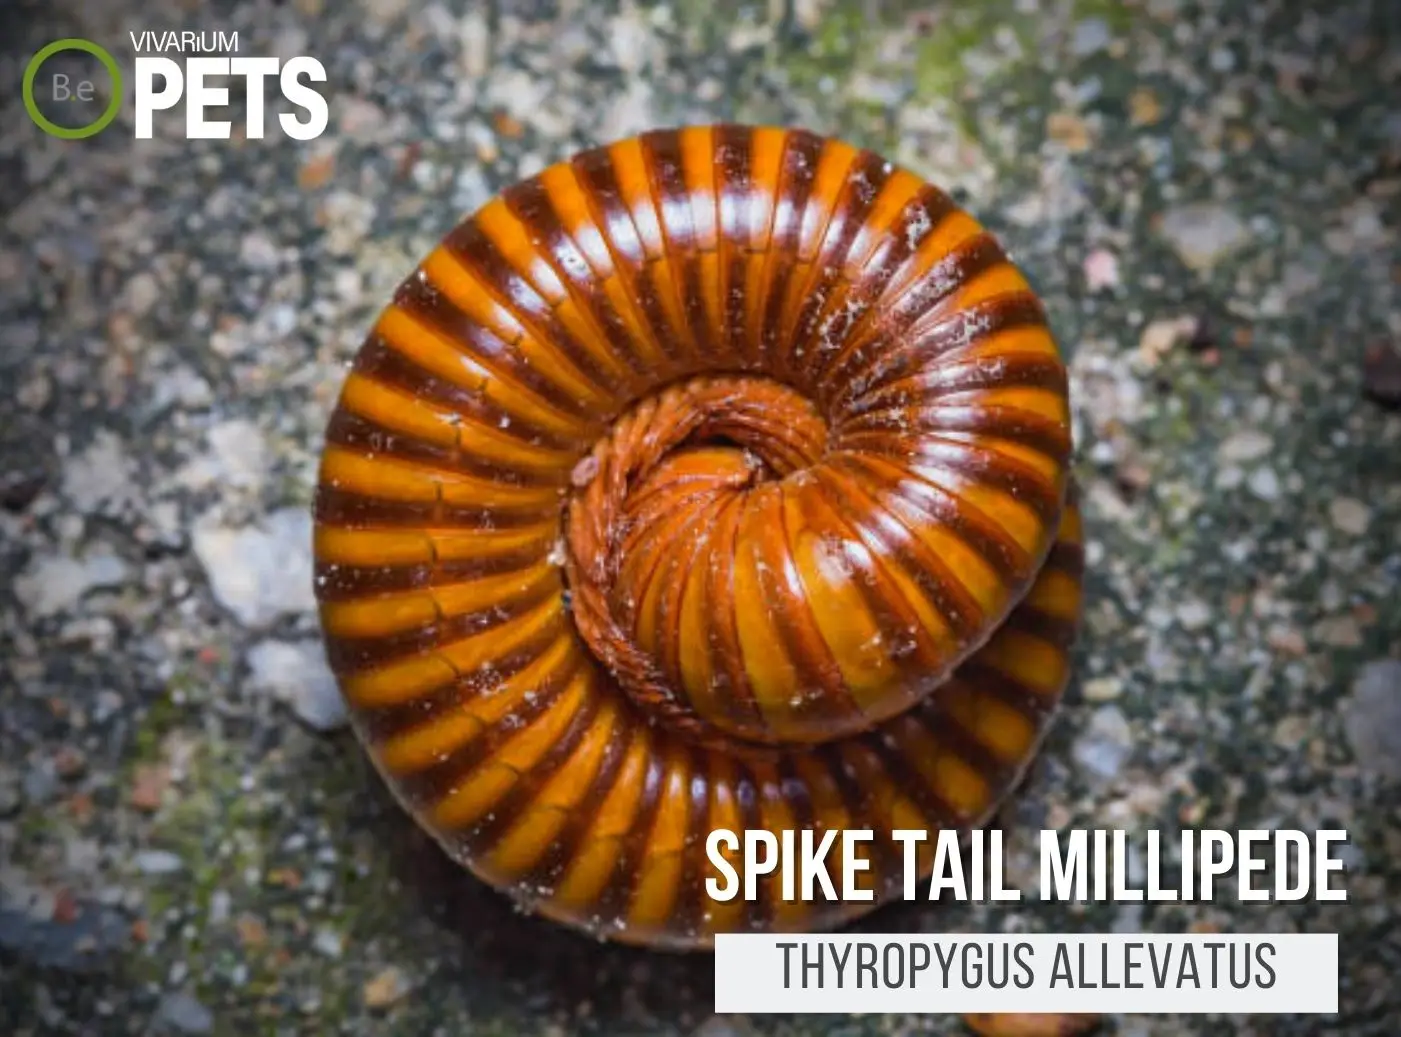 Thyropygus allevatus "Spike Tail Millipede" Care Guide